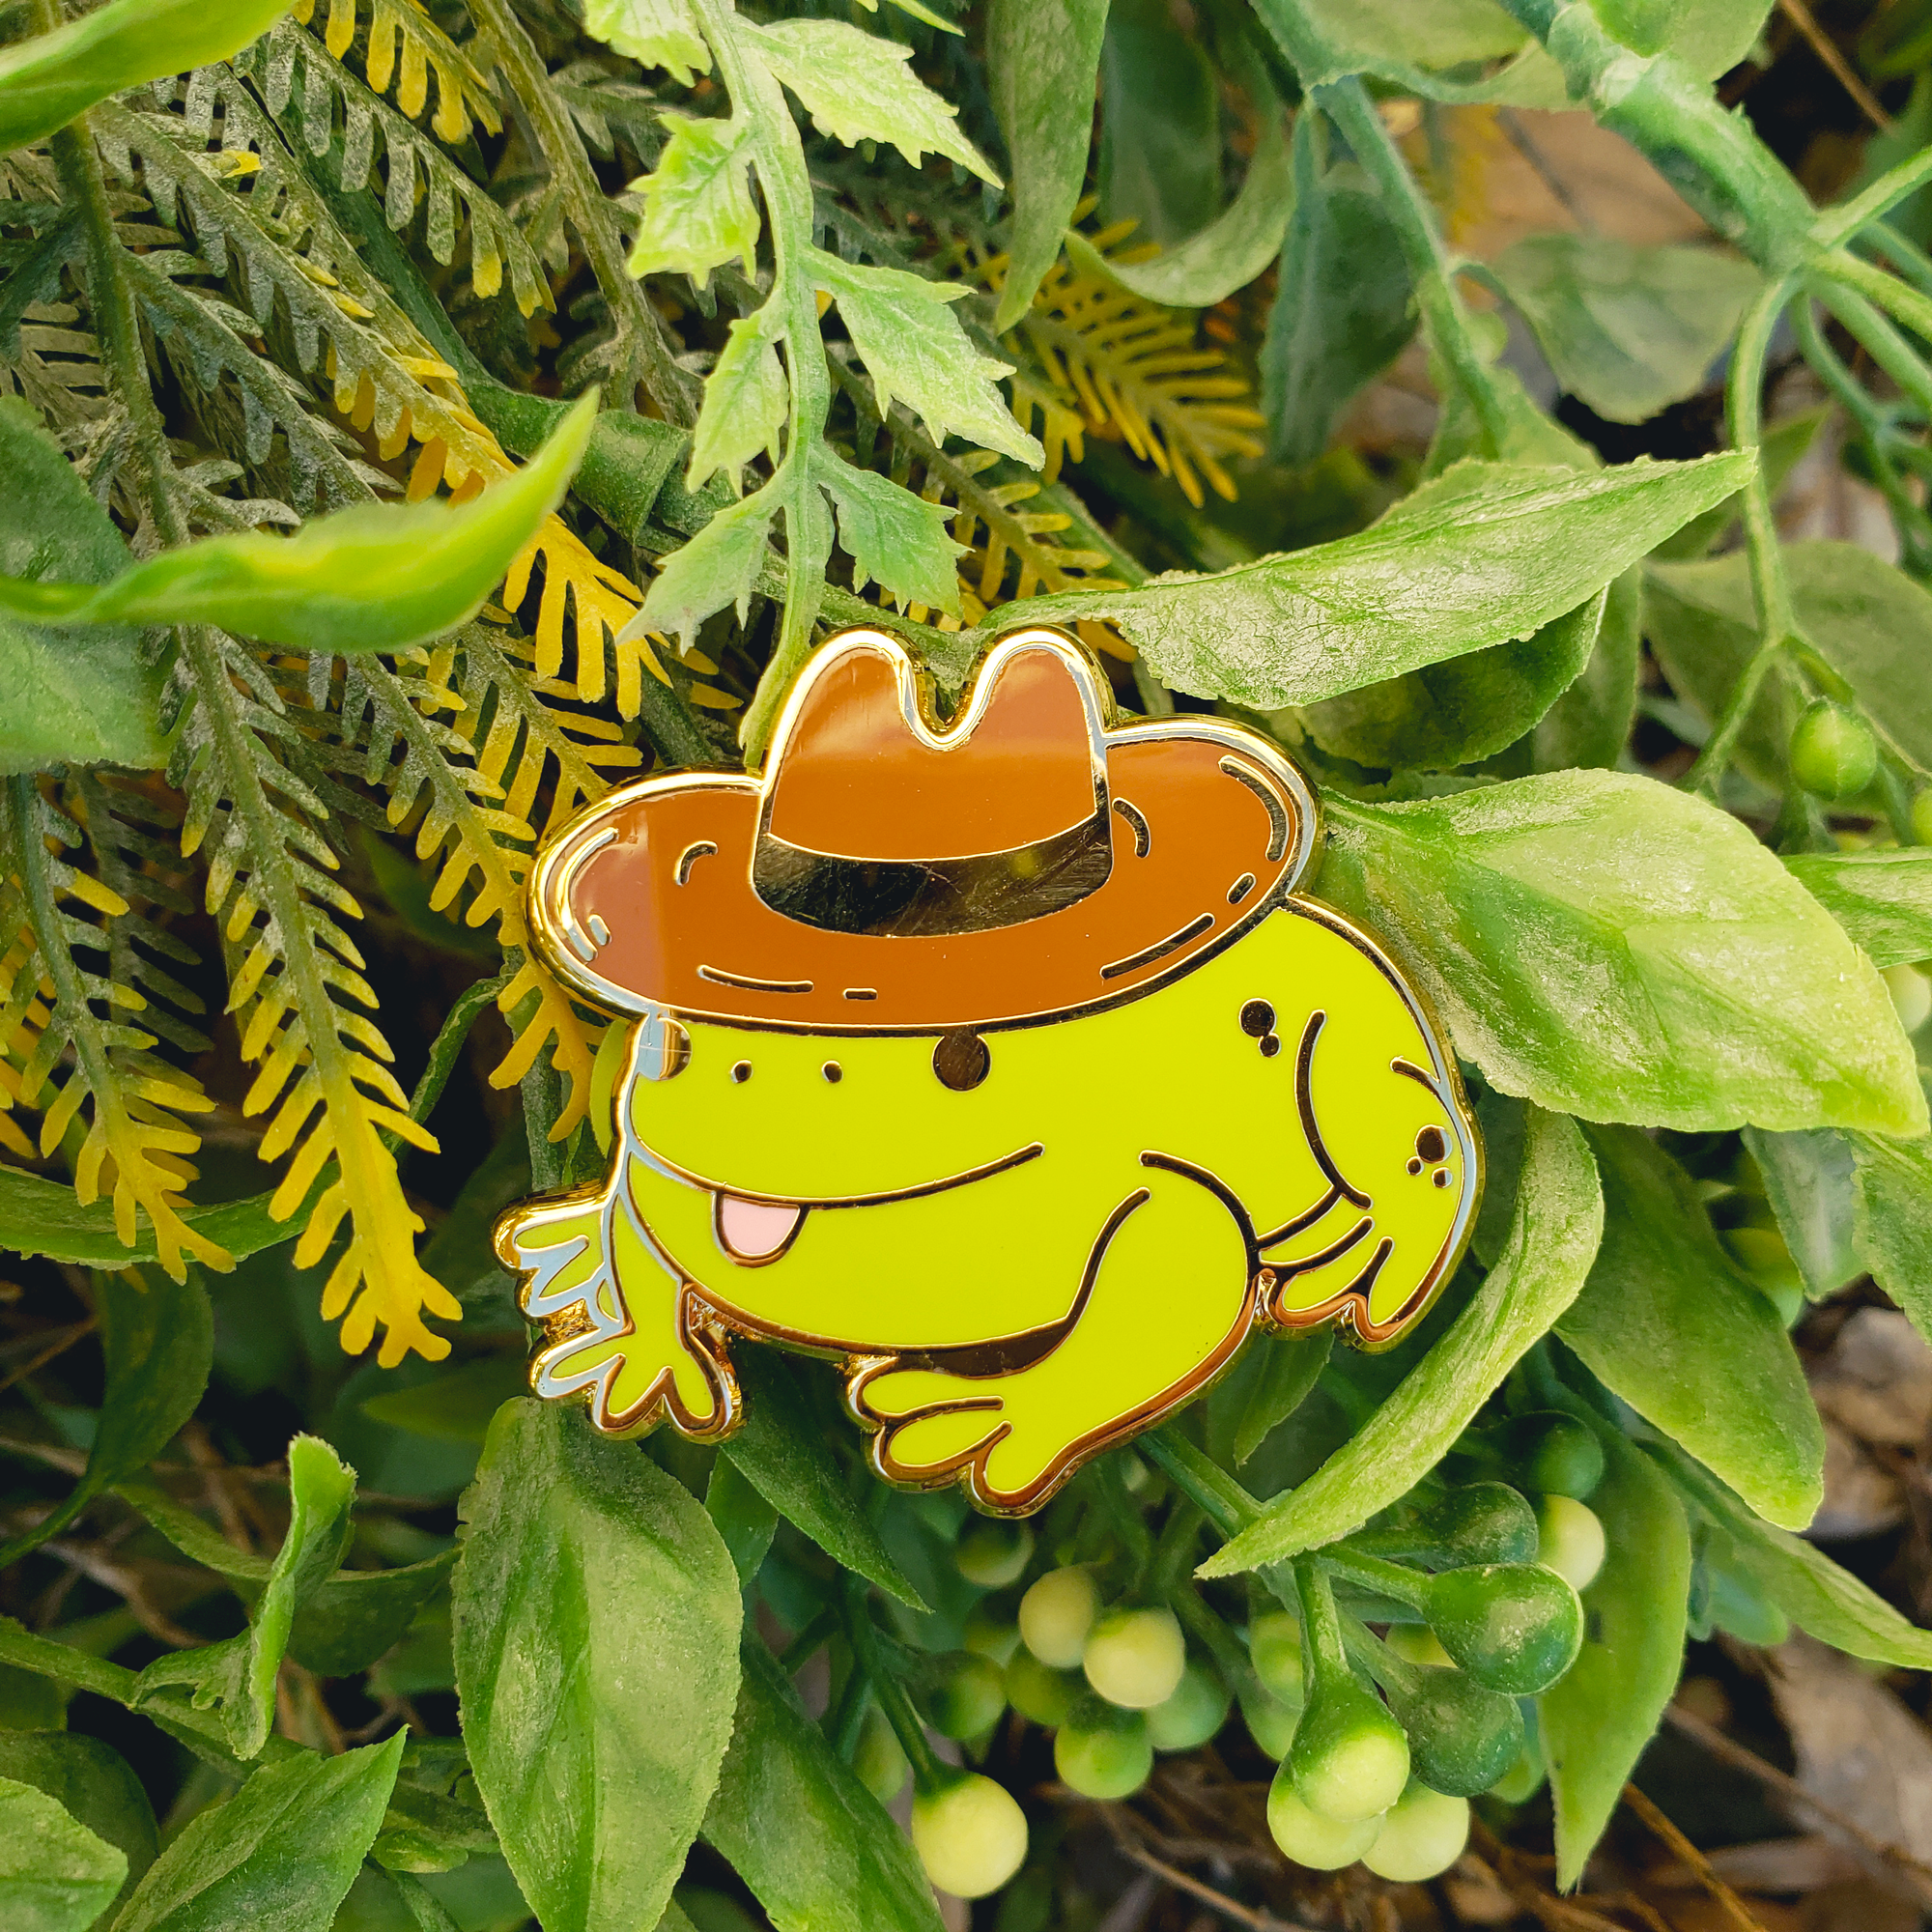 Cowboy Frog